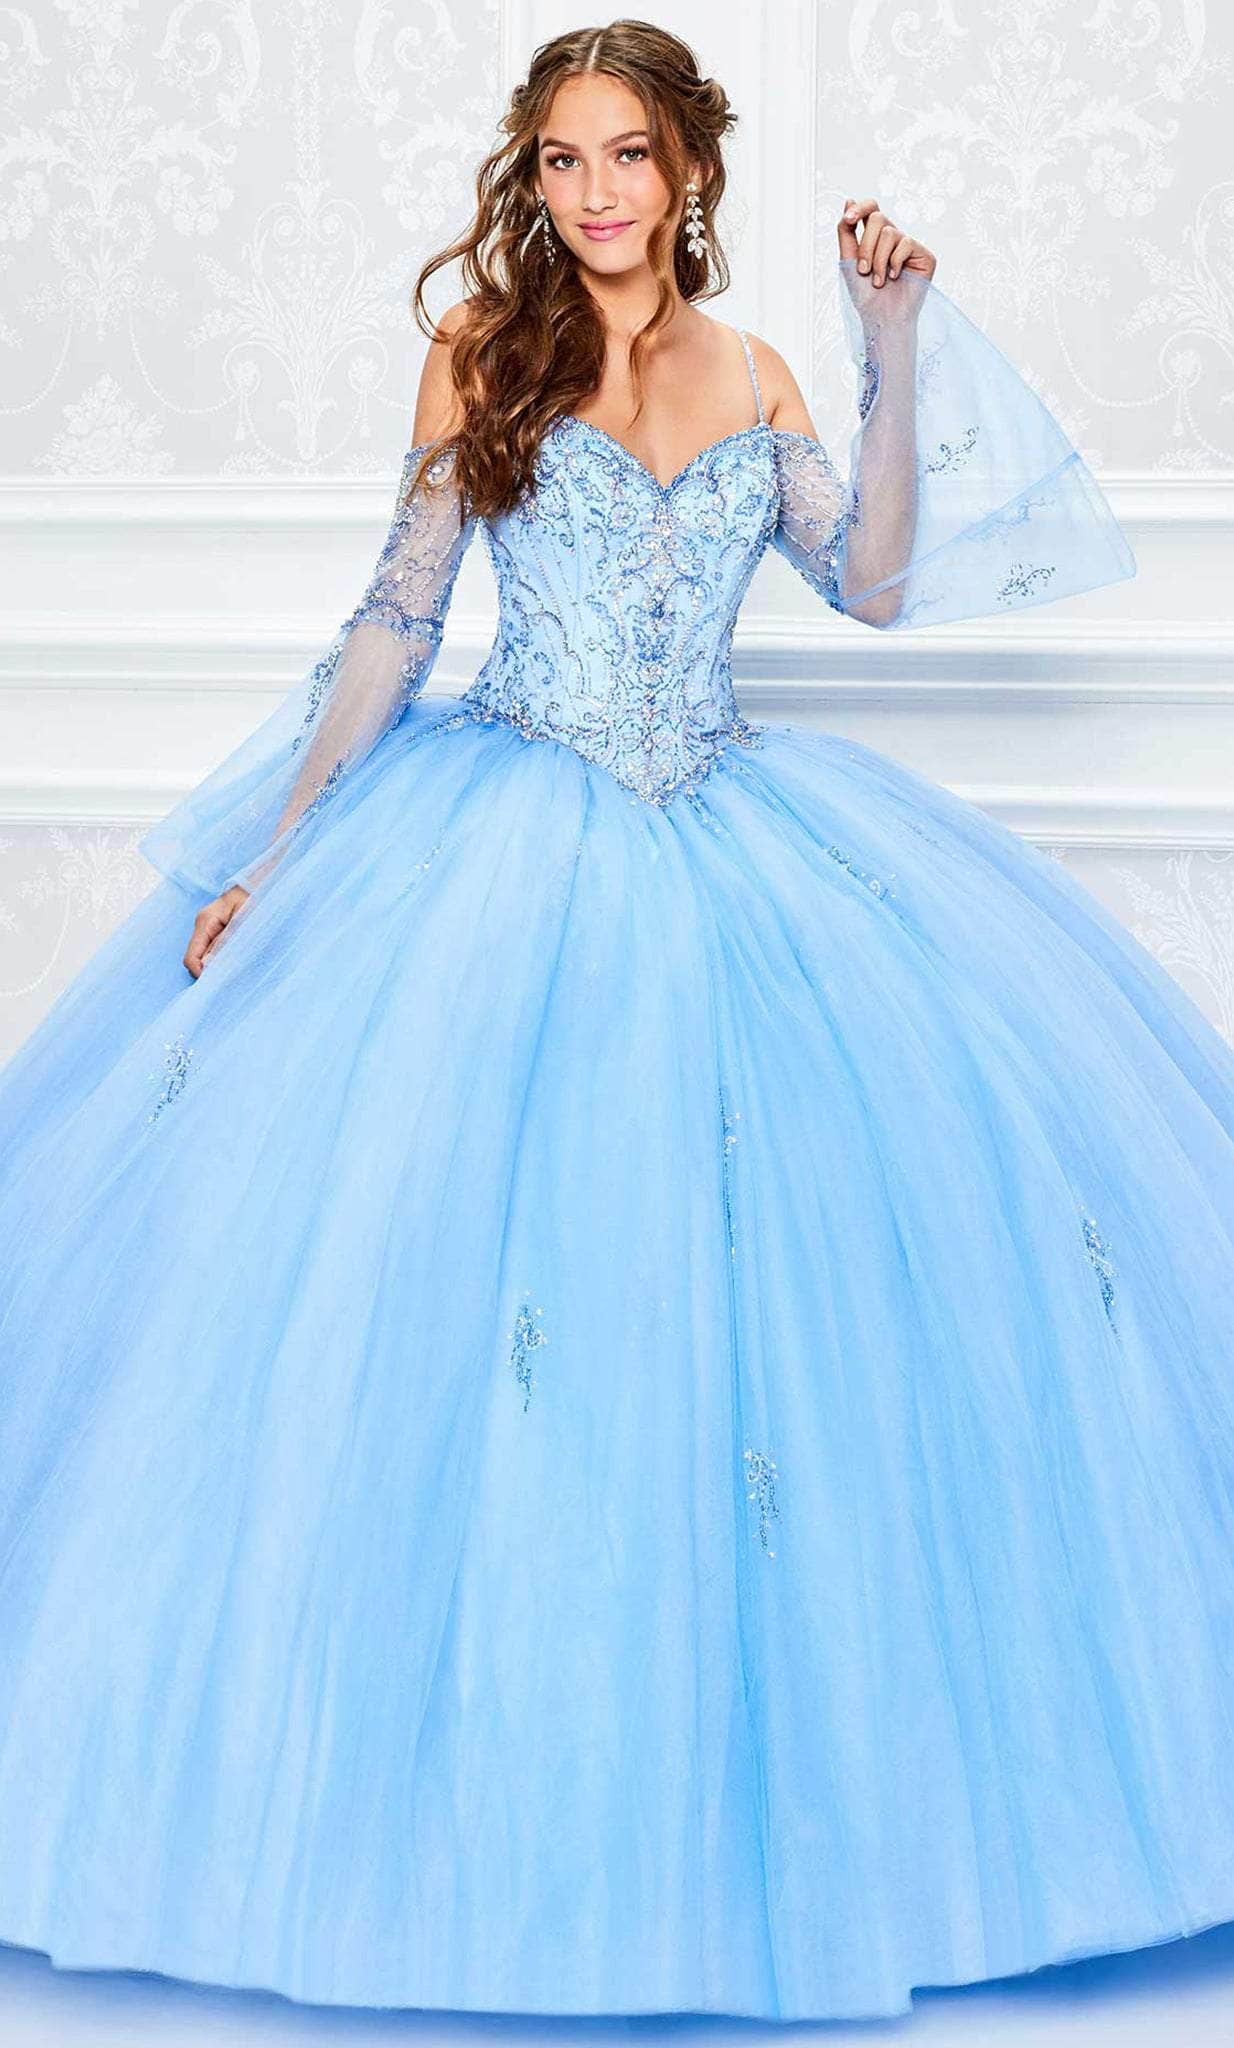 Princesa by Ariana Vara PR11941 - Bell Sleeve Ballgown